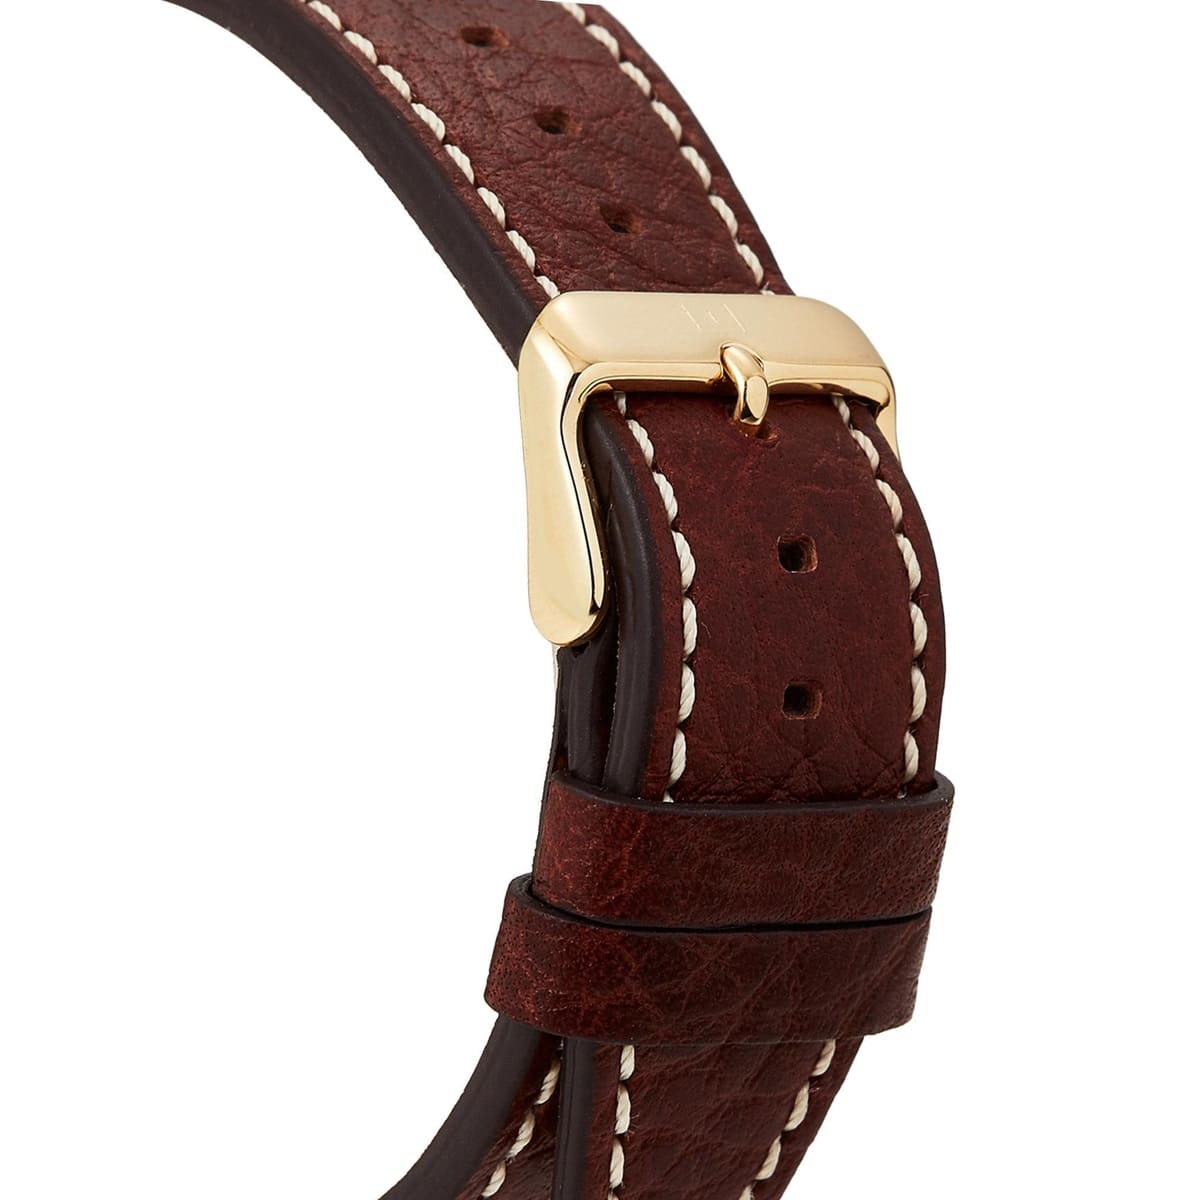 Tommy Hilfiger Jake Quartz White Dial Brown Leather Strap Watch for Men - 1791231